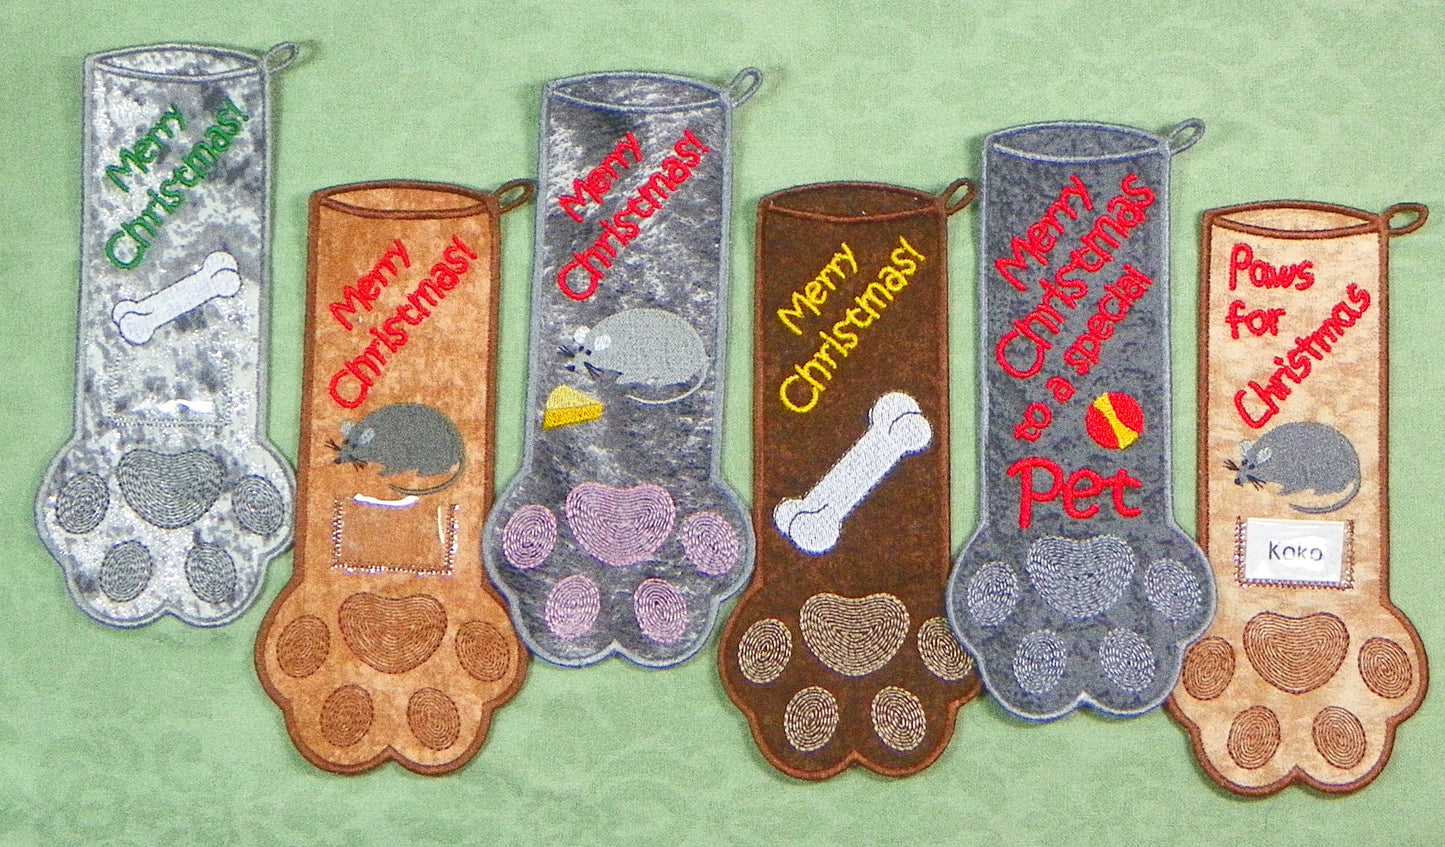 FSA ITH Pet Christmas Stockings [6x10] Machine Embroidery Designs # 11573